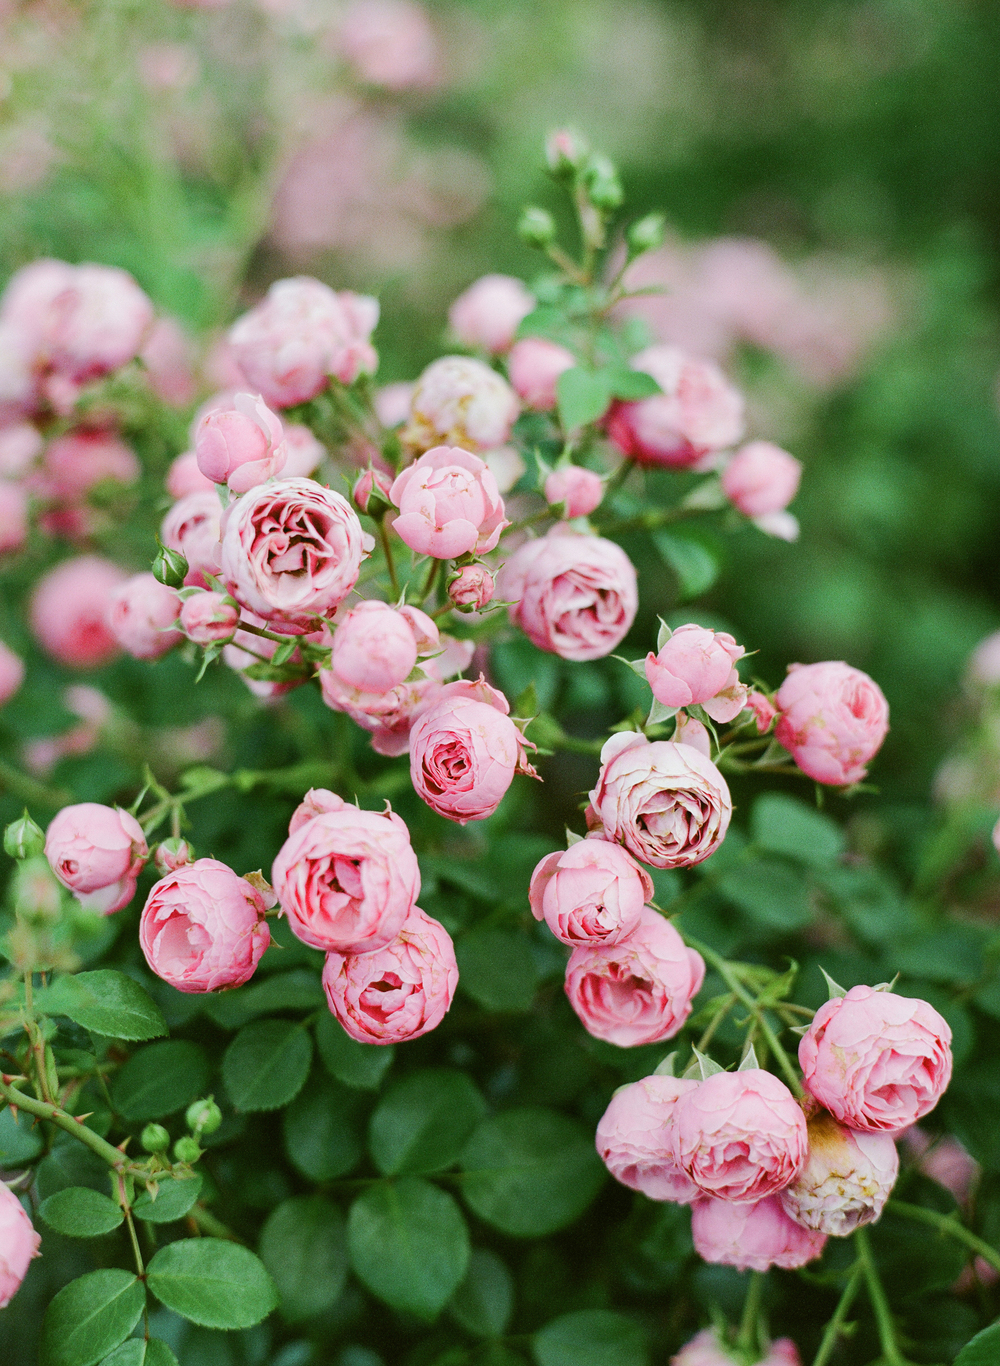 roses at the Biltmore Estate in Asheville, North Carolina